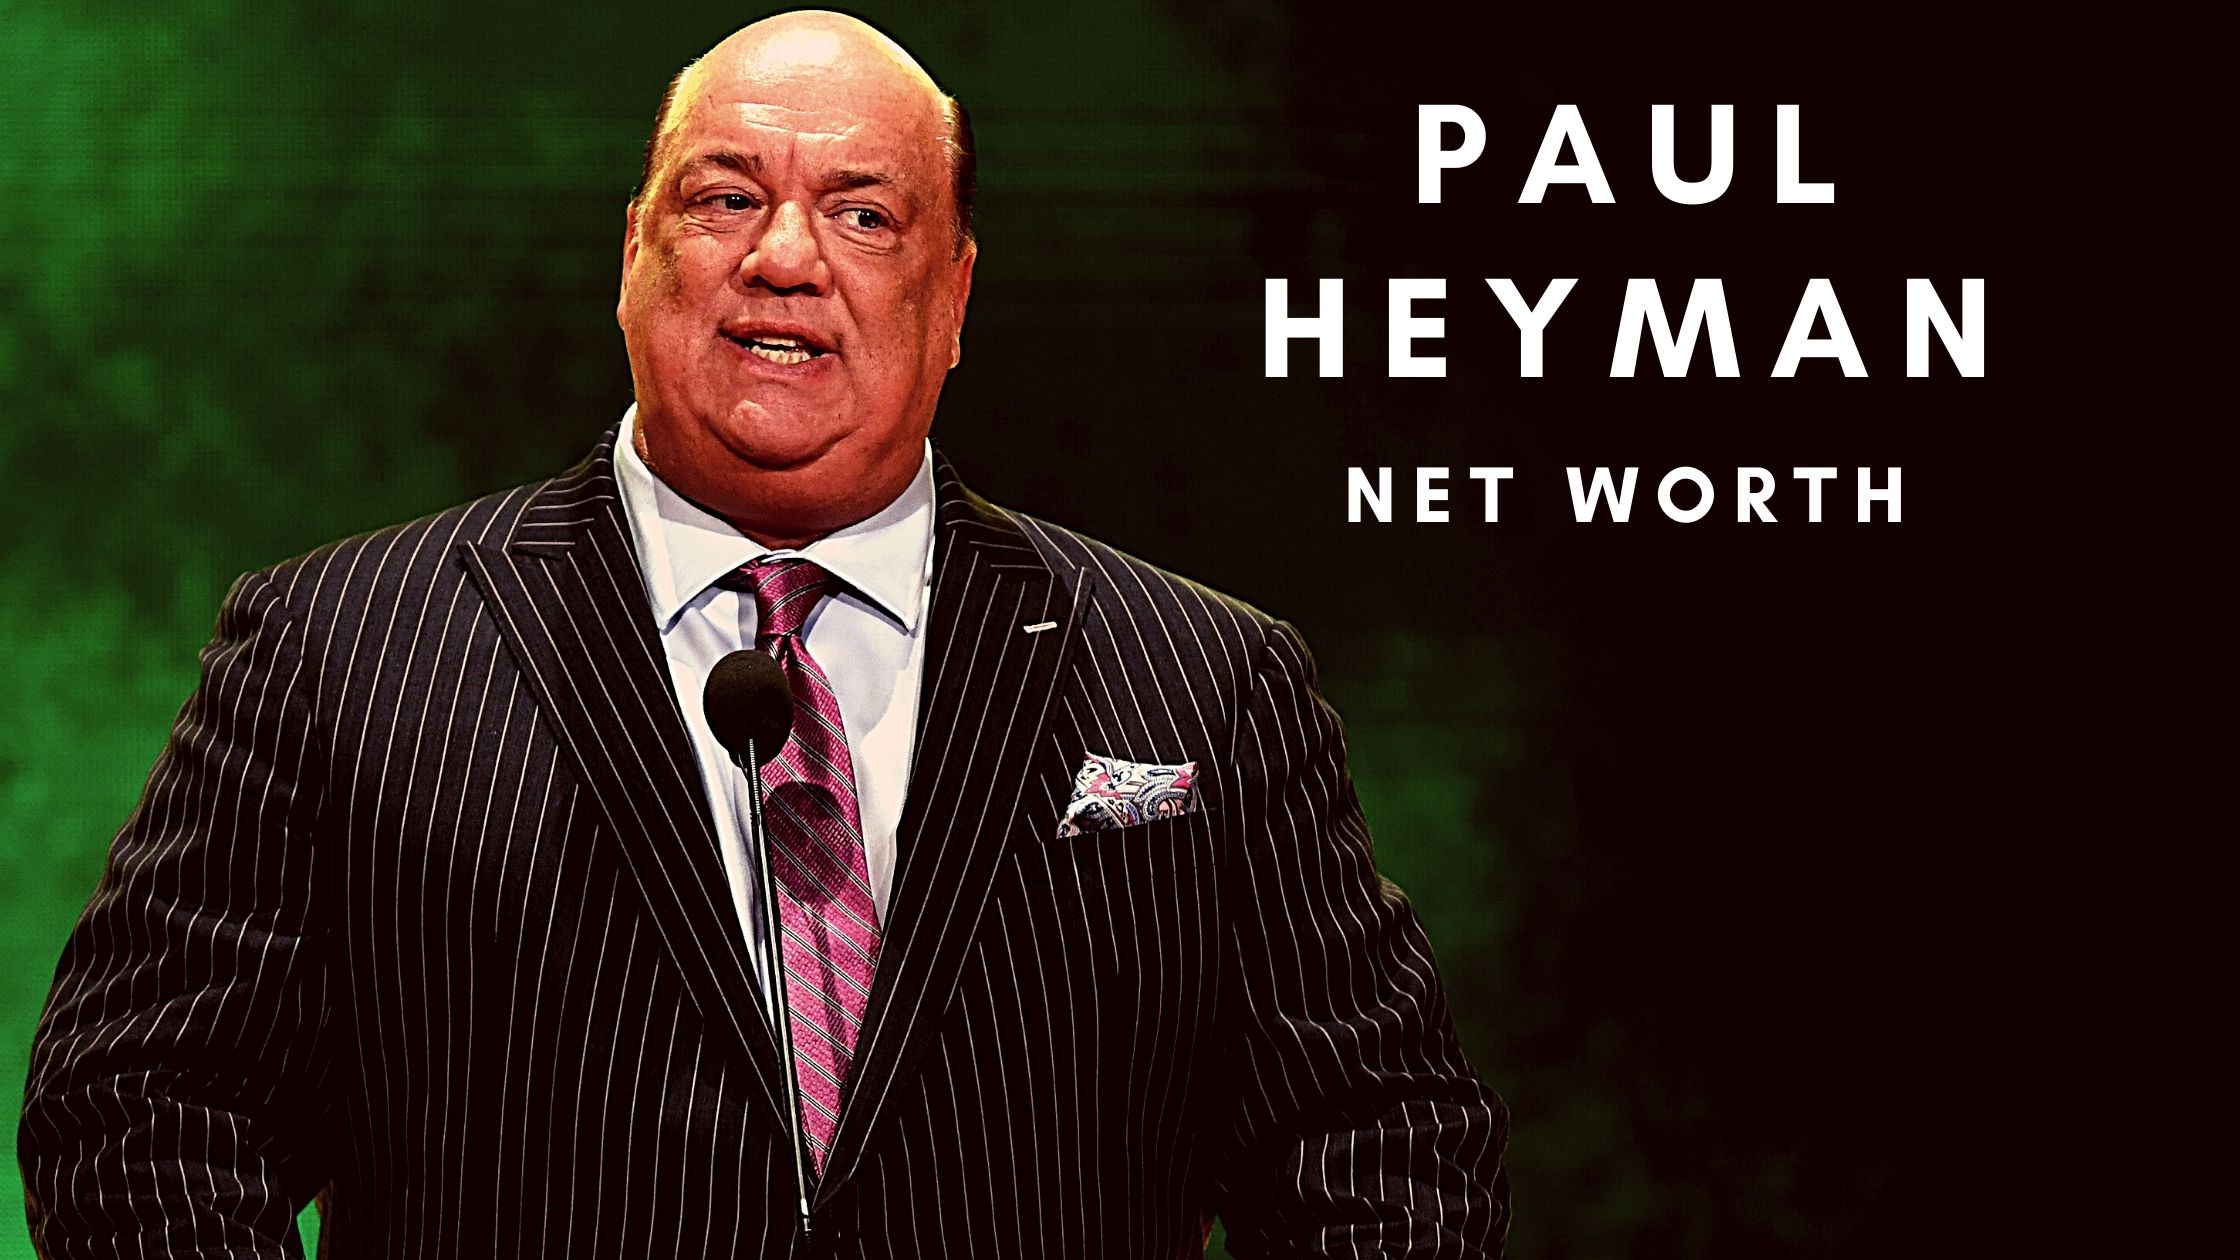 Paul Heyman has amassed a huge net worth in 2020